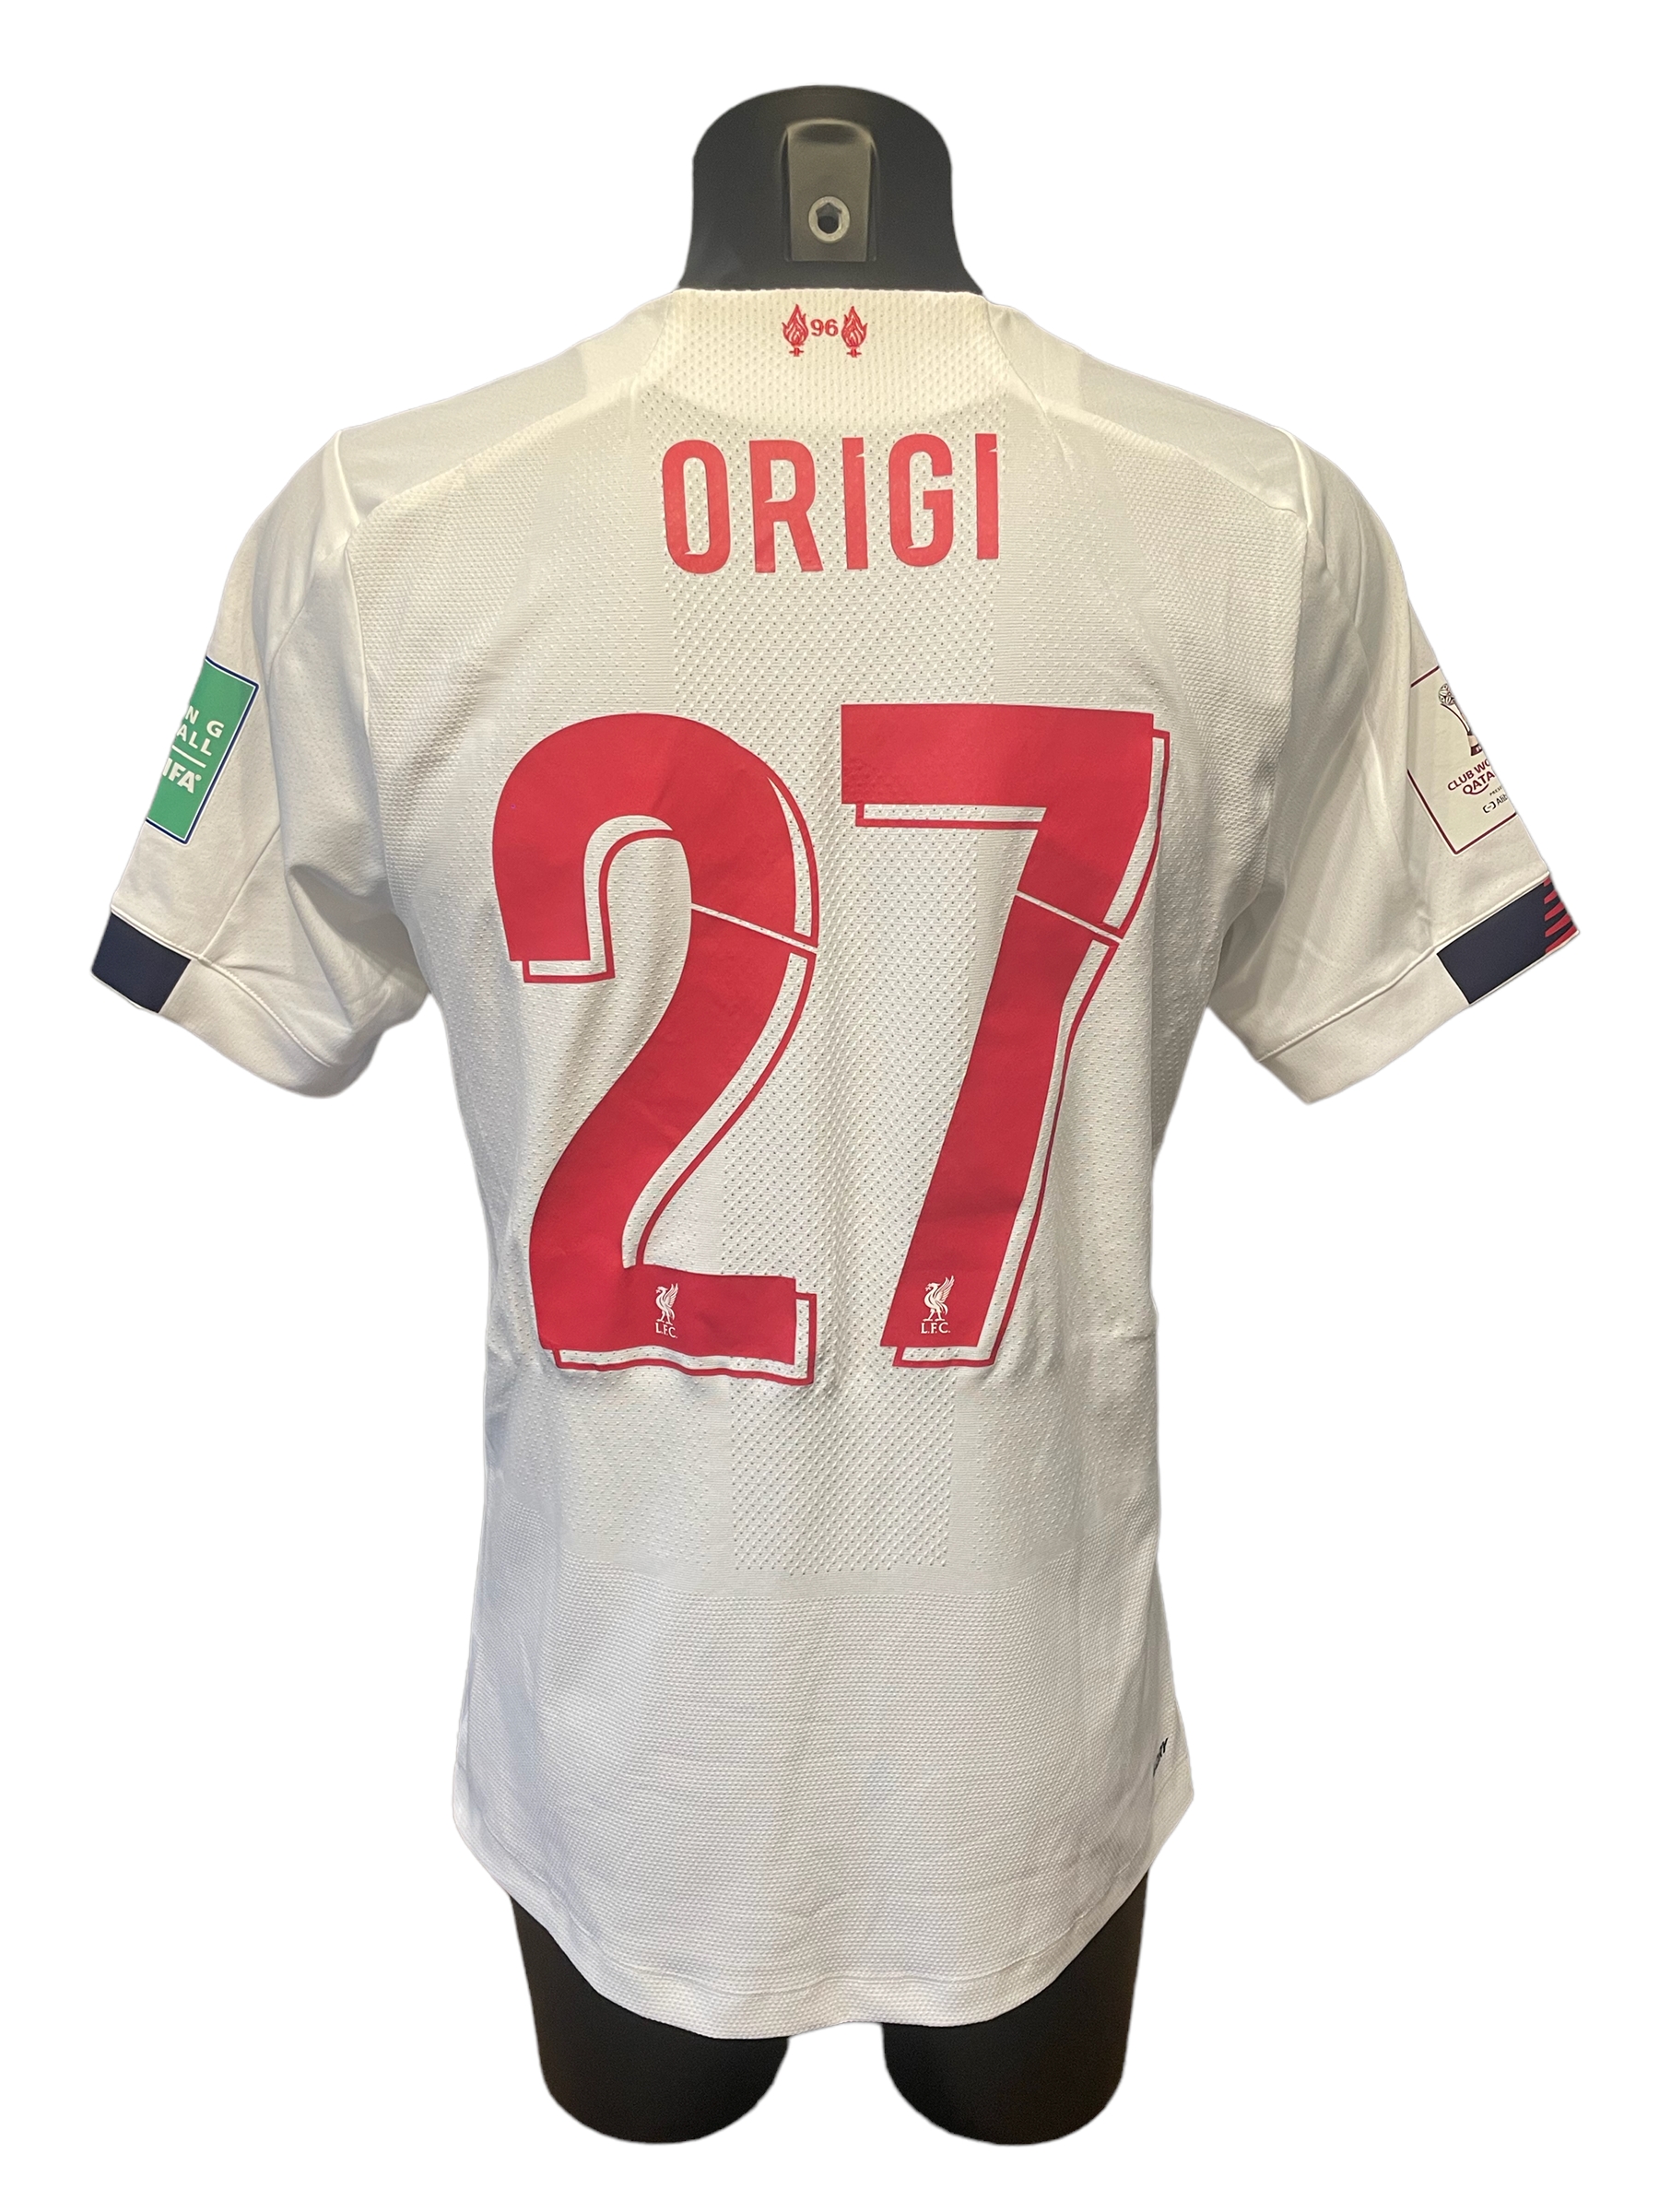 NEW YORK - JULY 24, 2019: Forward Divock Ogiri Of Liverpool FC (27